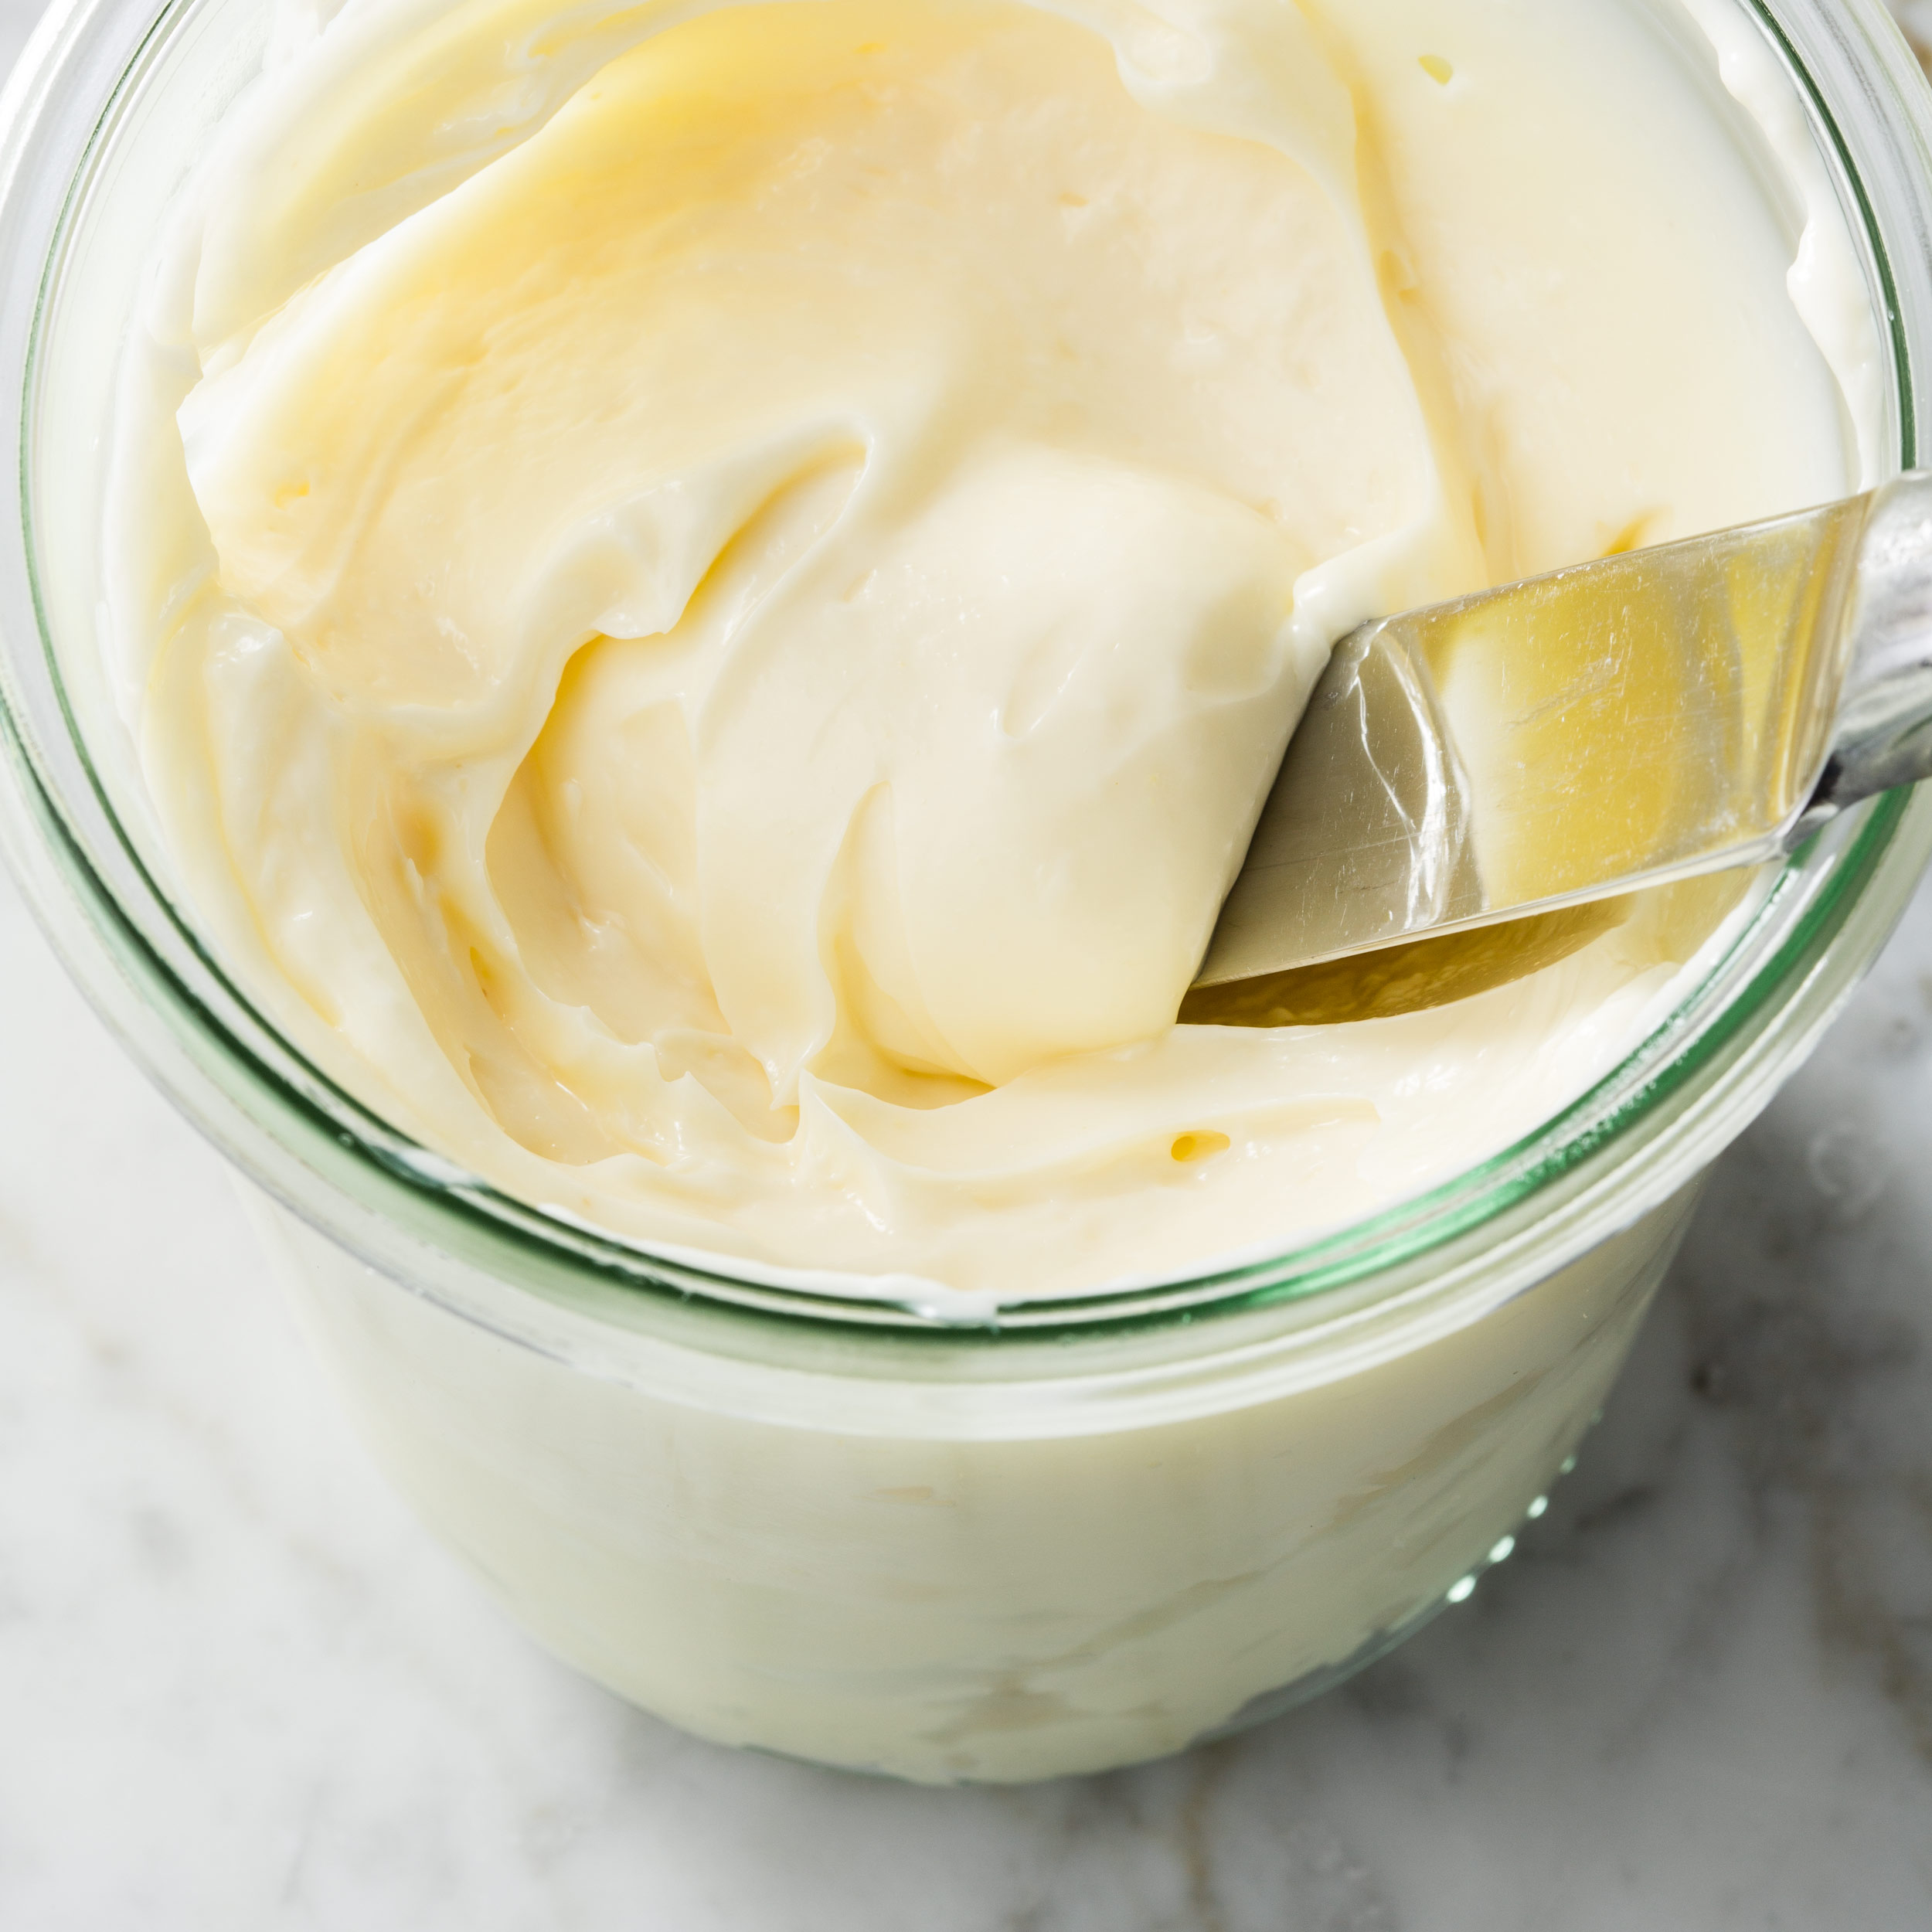 How to Make Homemade Mayonnaise